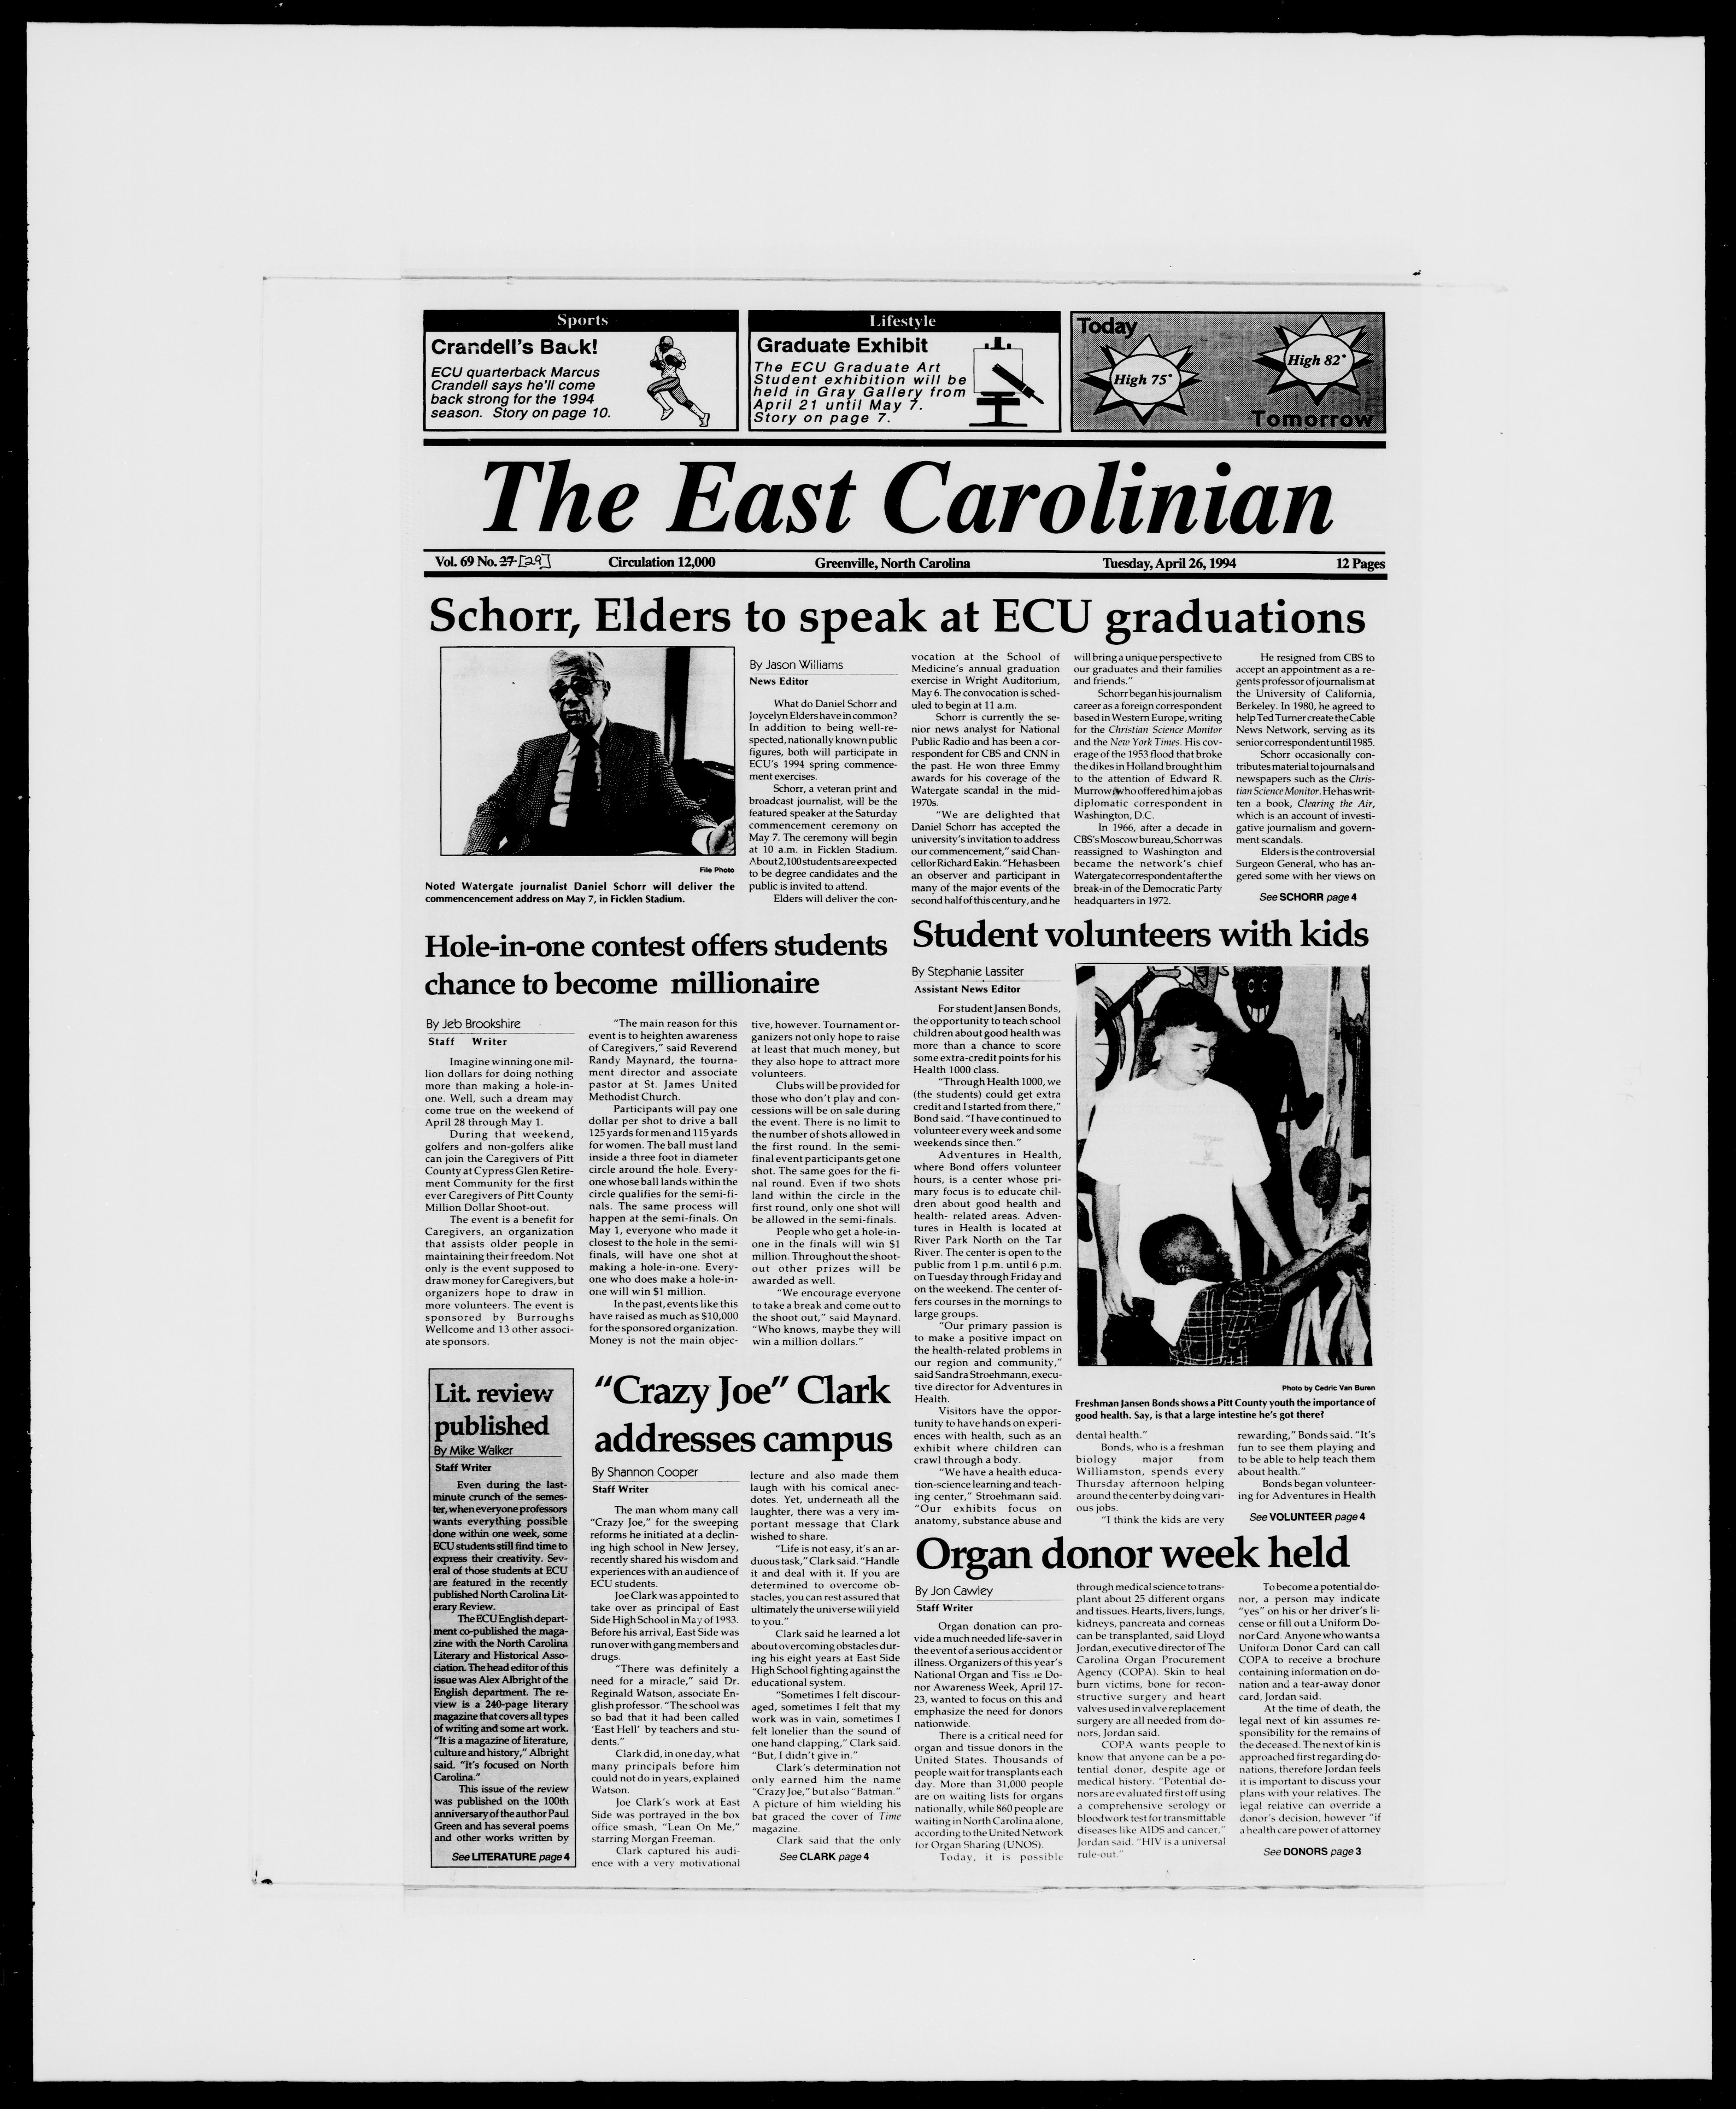 The East Carolinian, April 26, 1994 picture